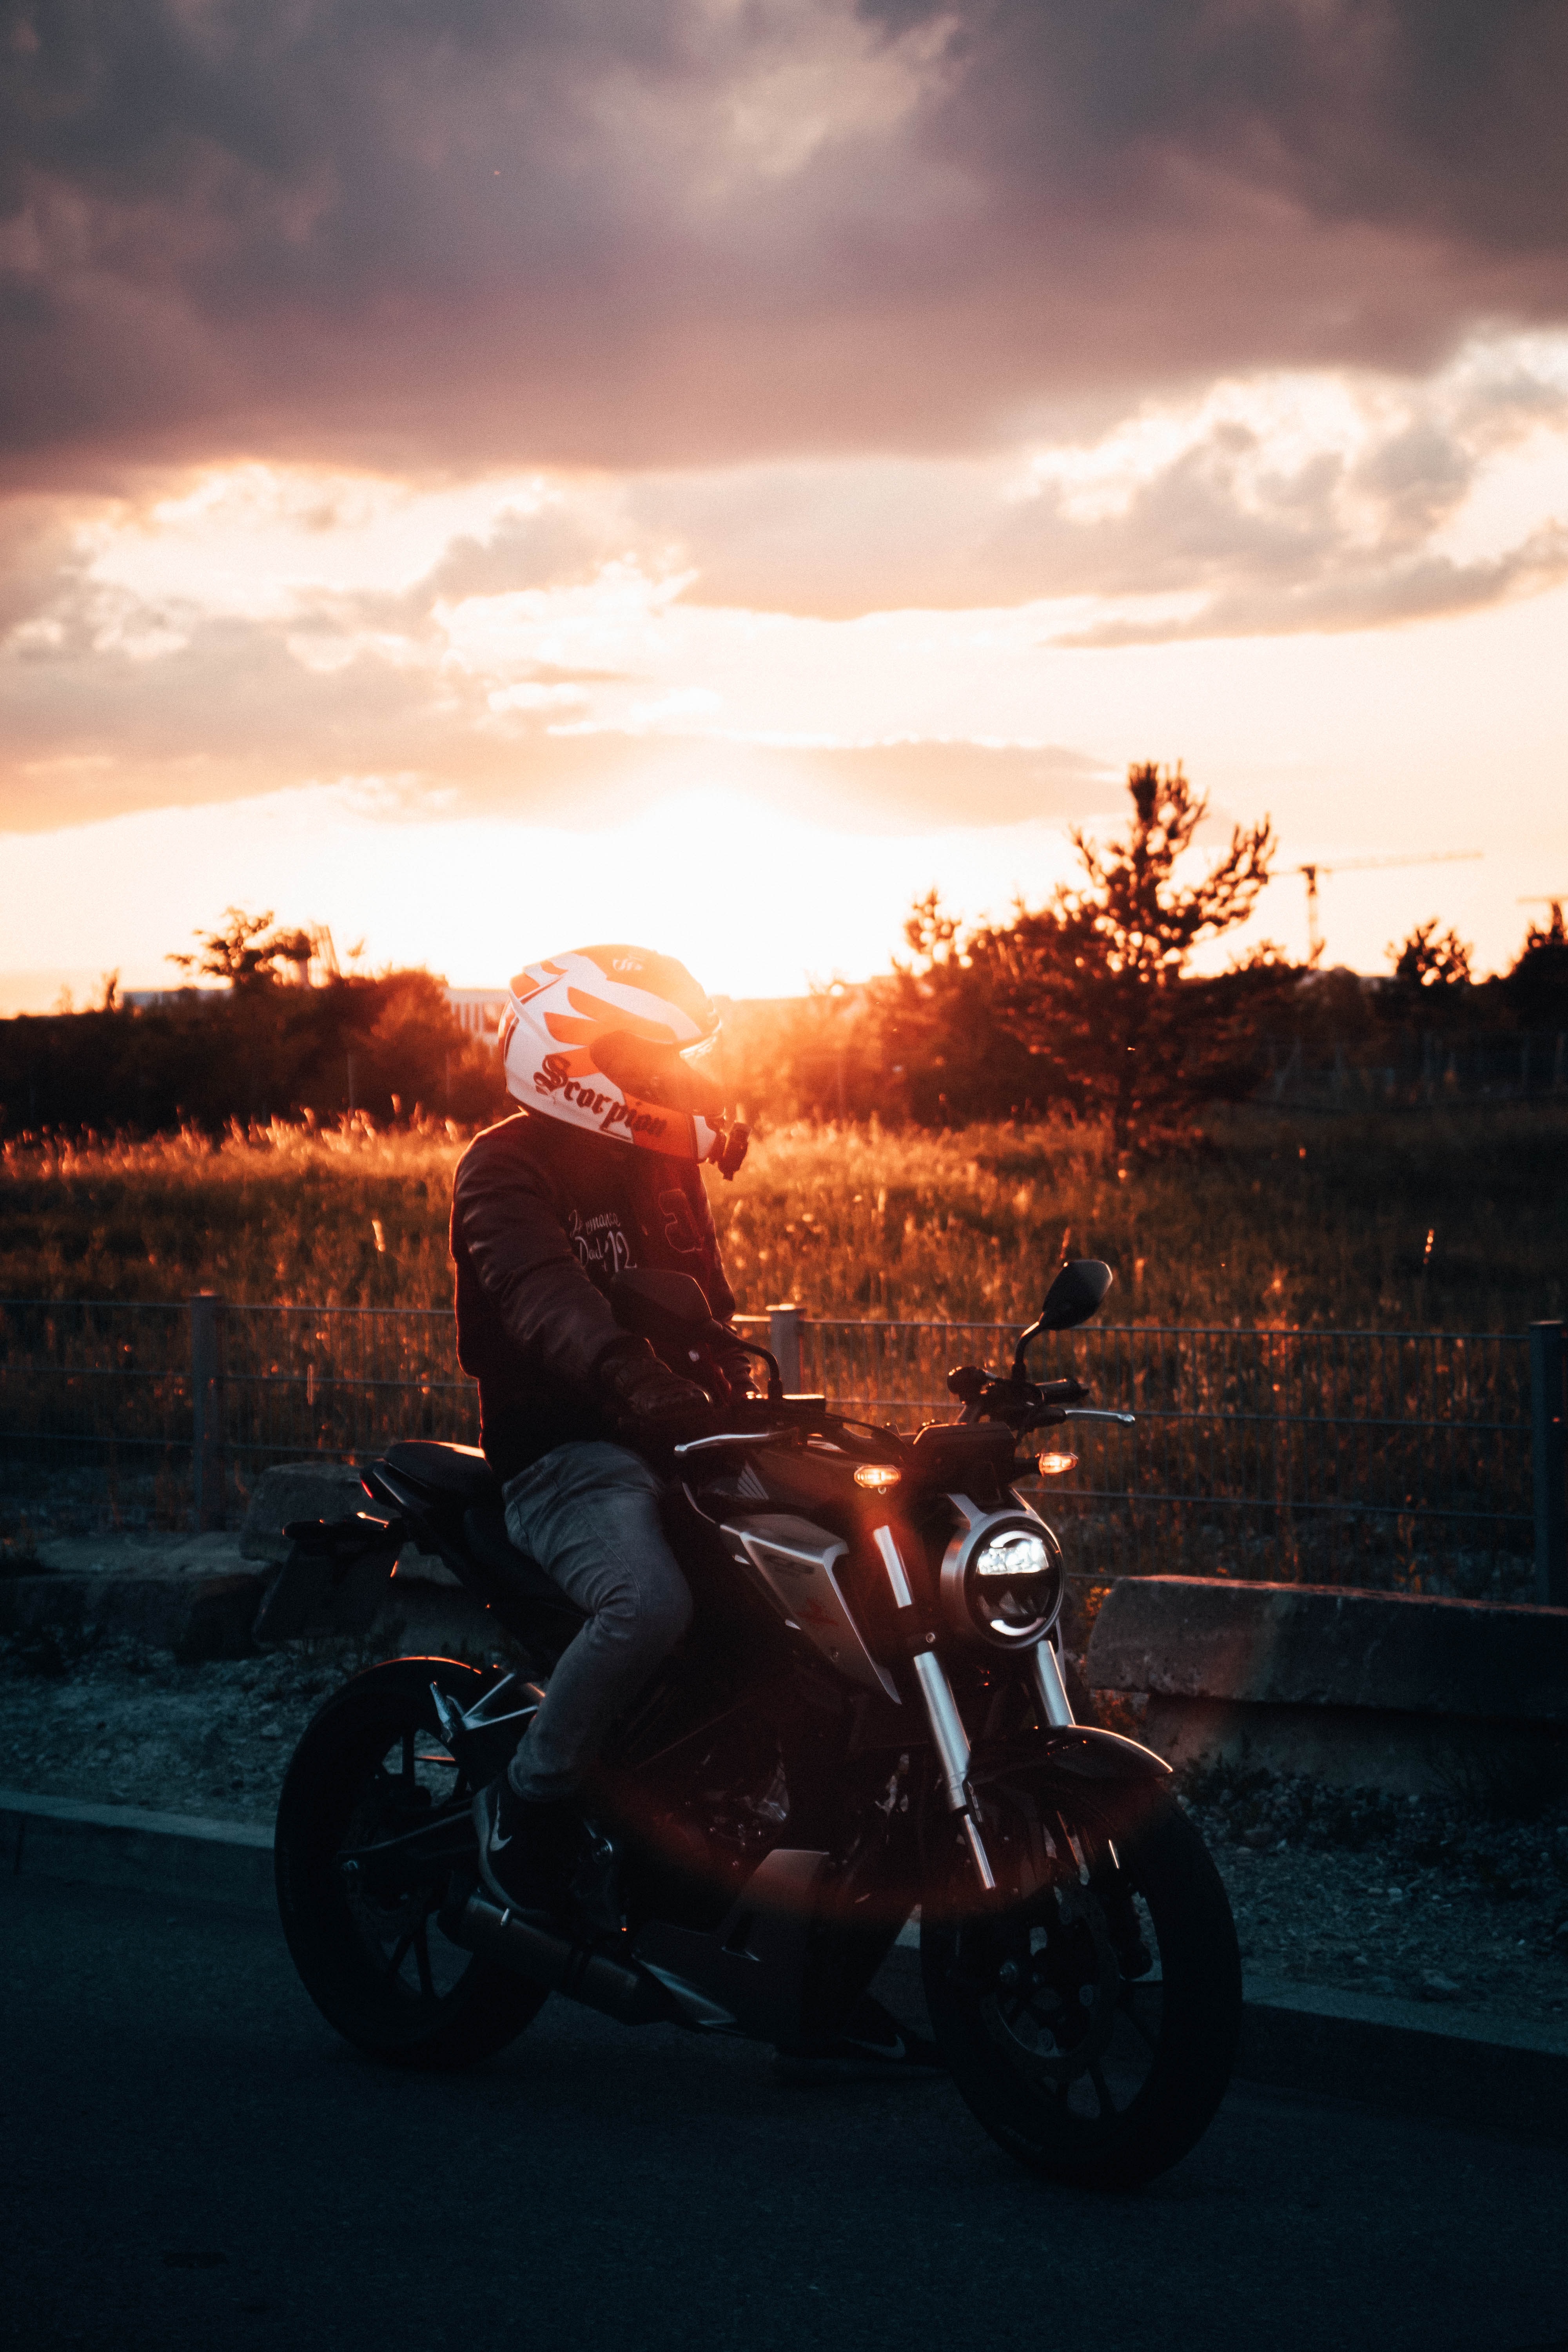 sunset, motorcycles, shine, light, motorcyclist, helmet, motorcycle